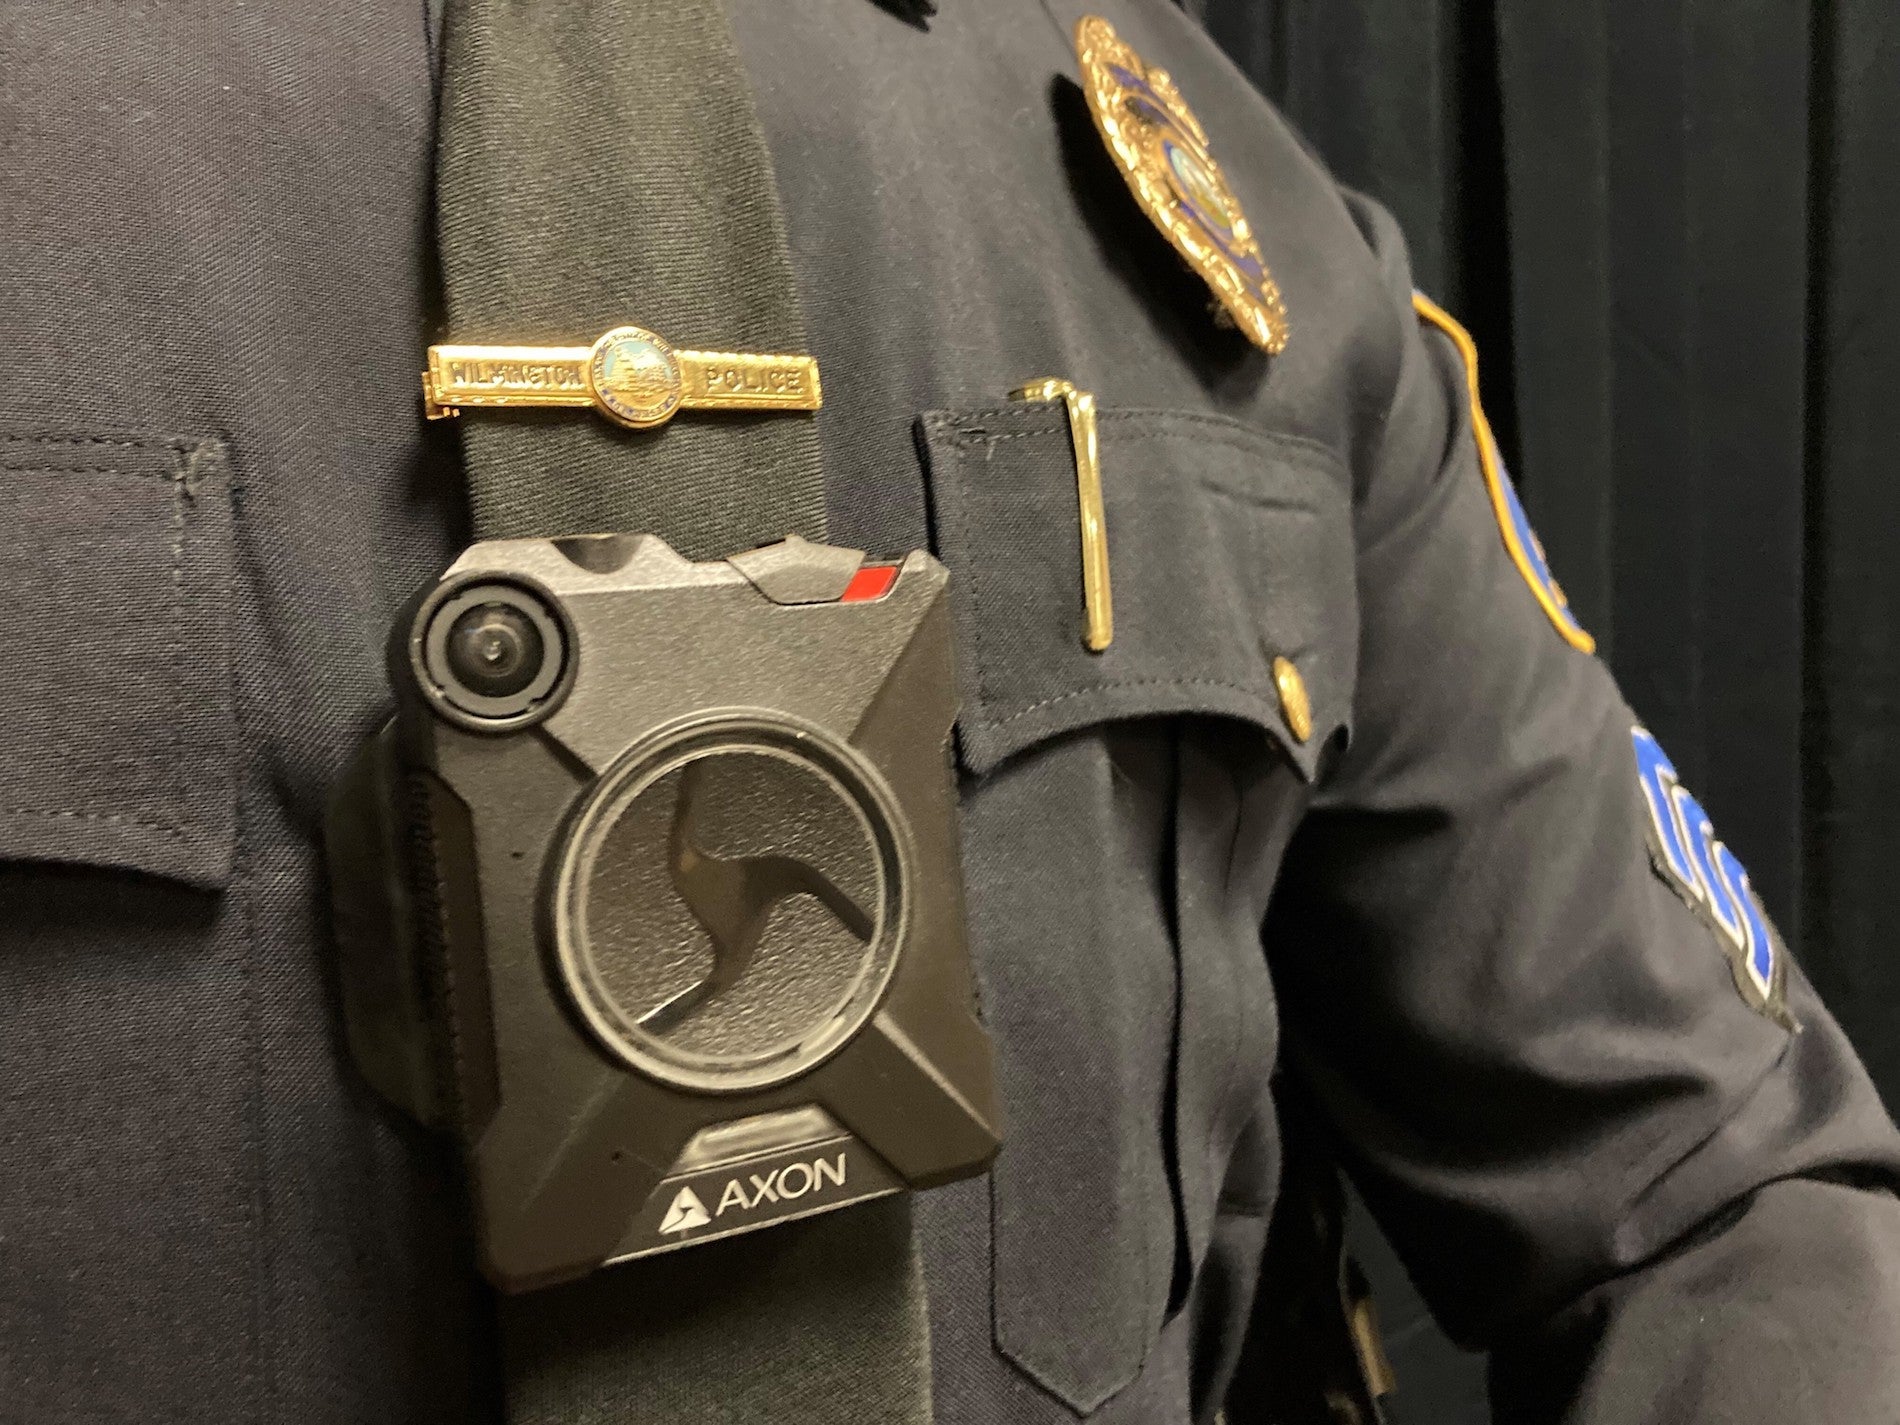 Bodycam® 4 Police Body Cameras